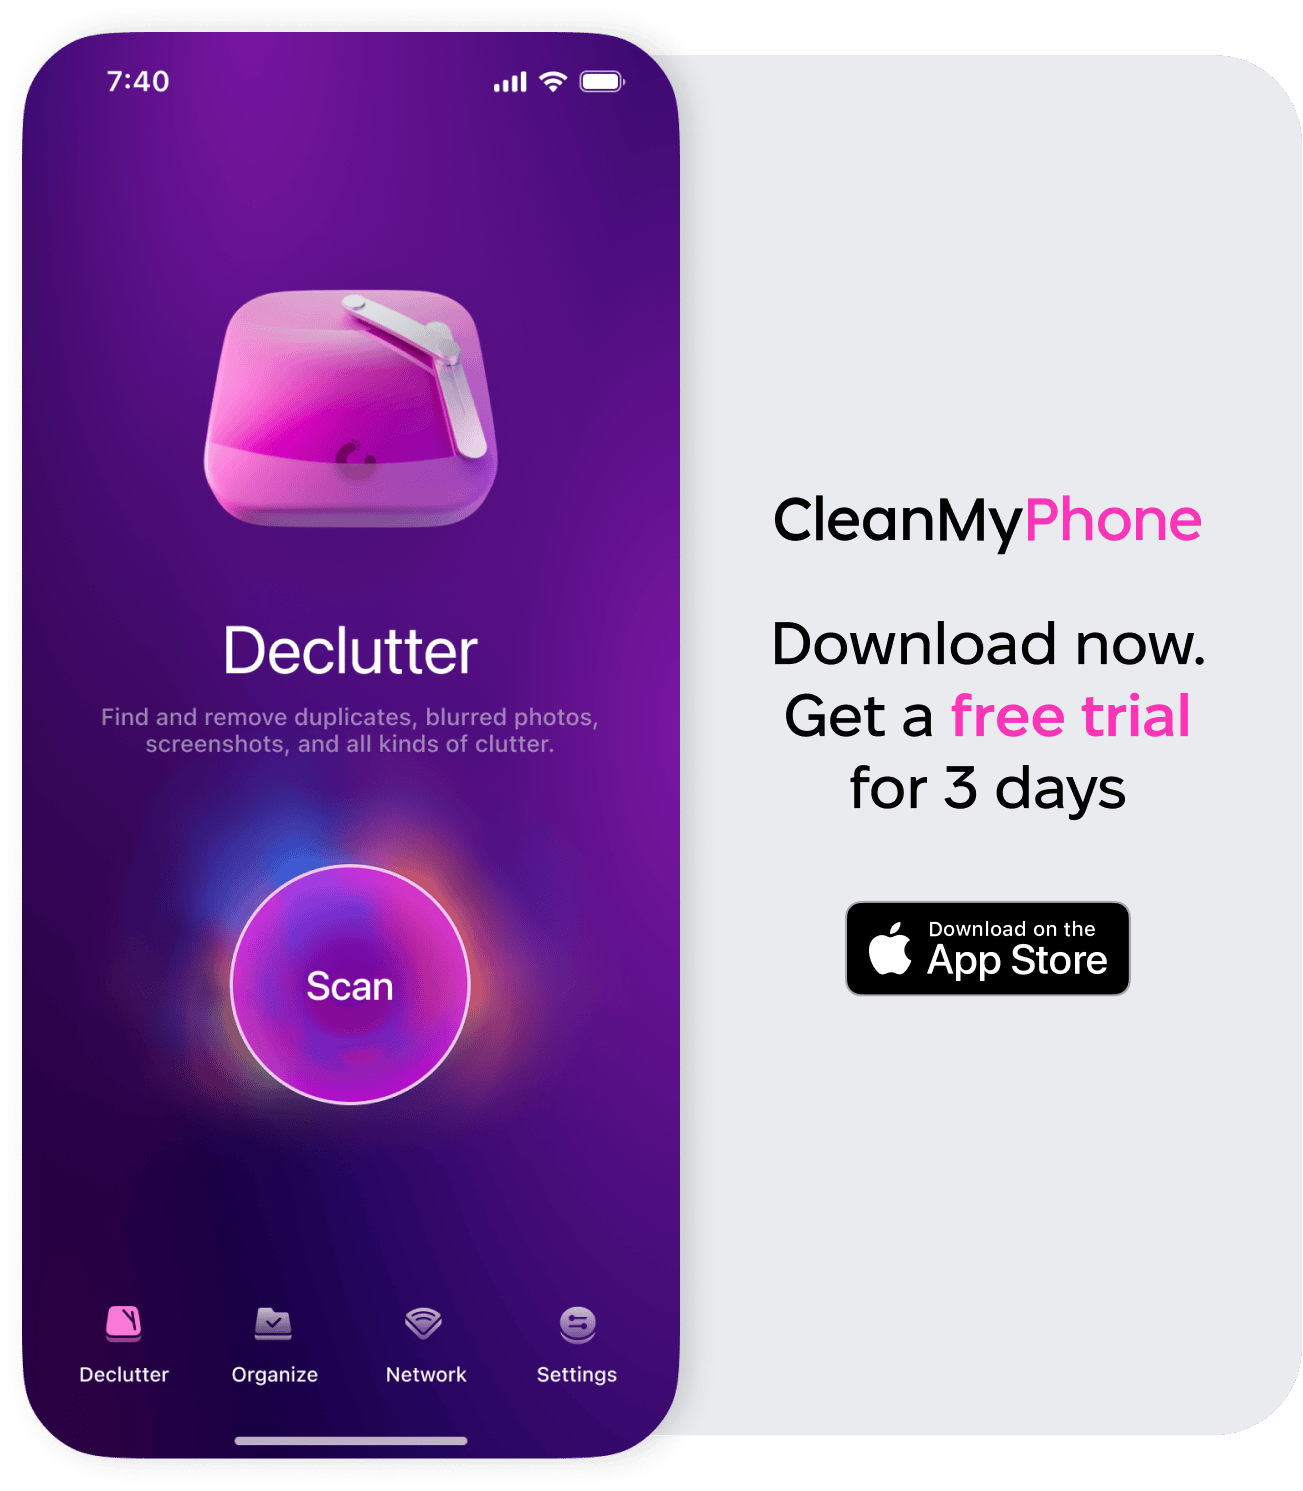 CleanMy®Phone app